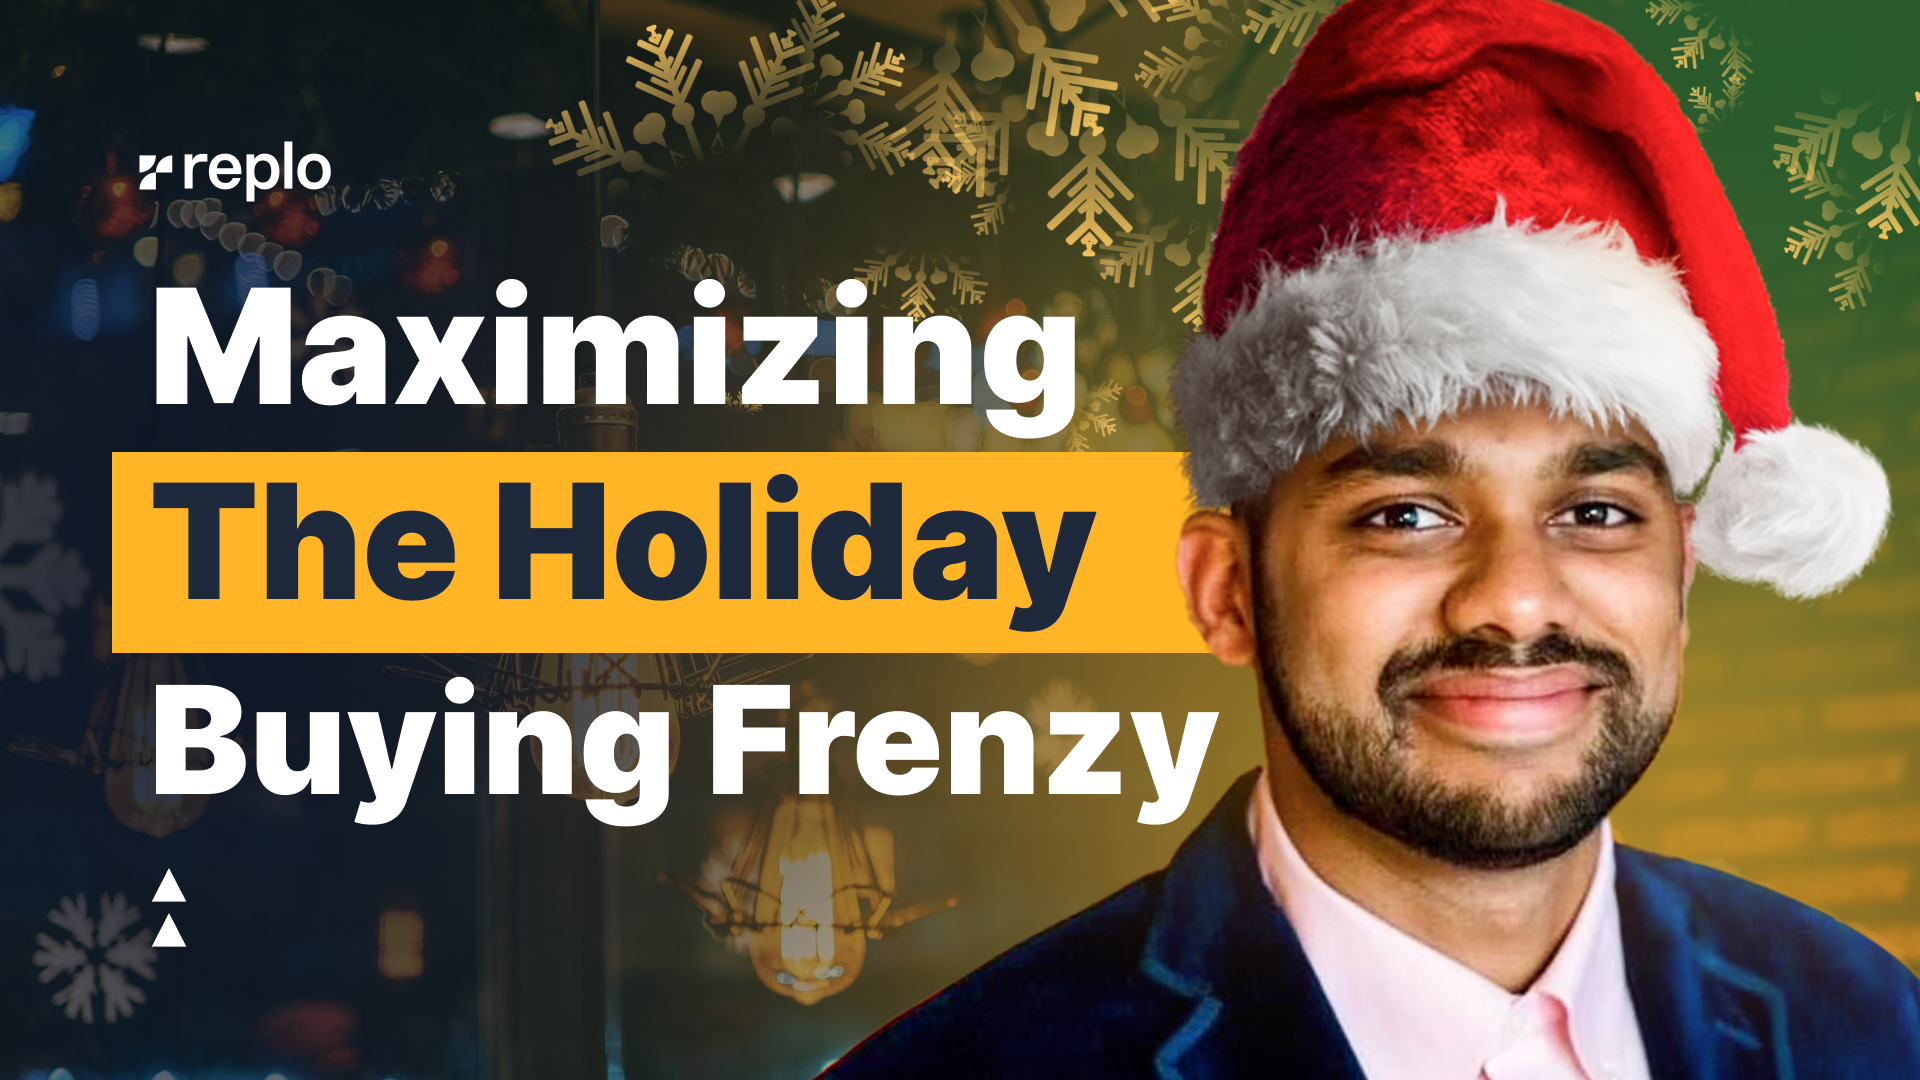 Maximizing The Holiday Retail Frenzy